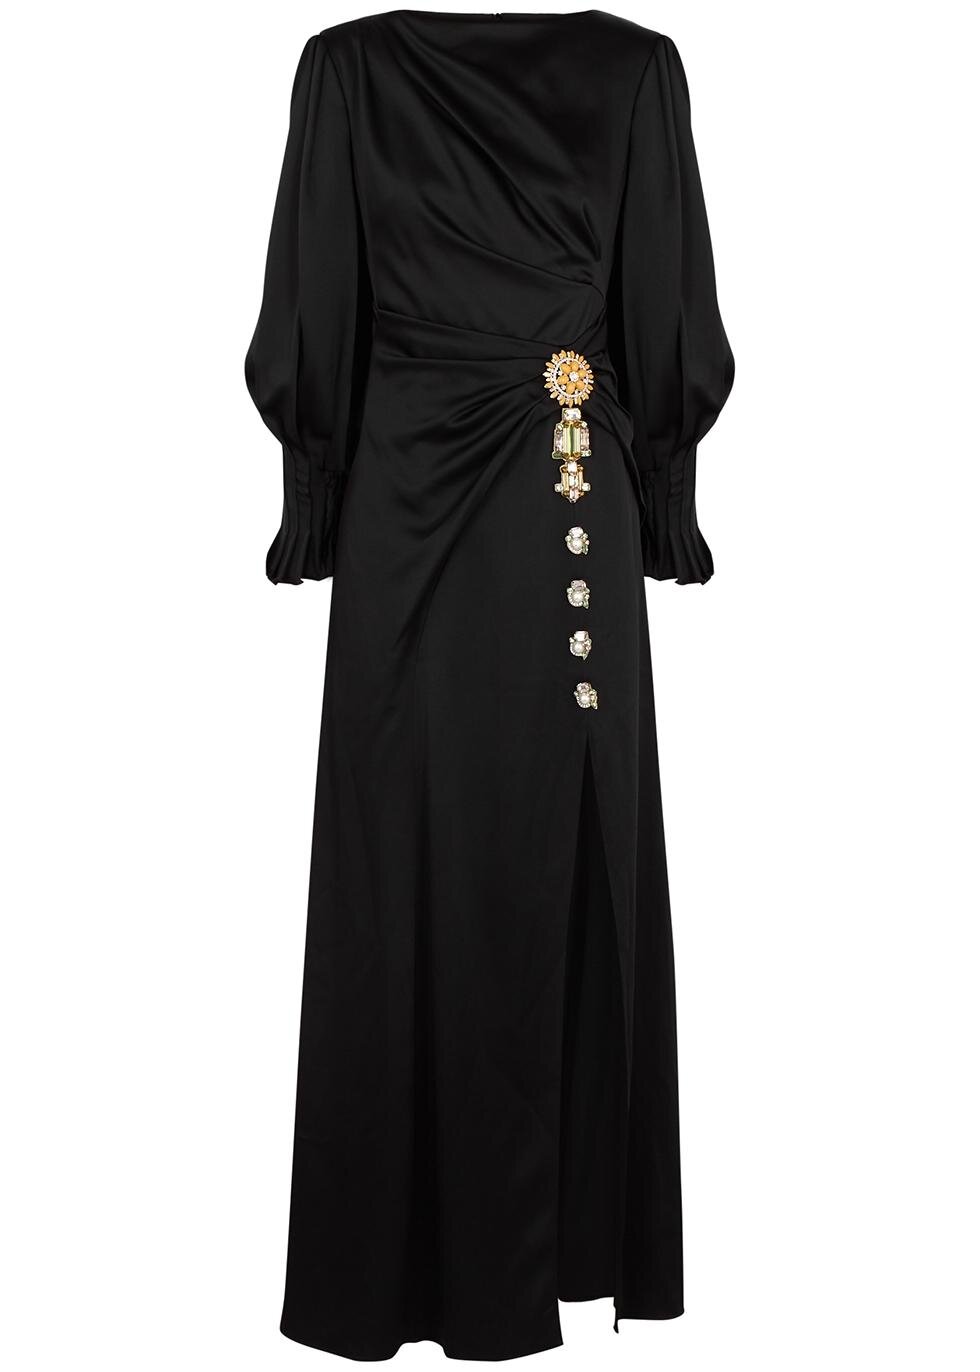 Peter Pilotto Brooch-Embellished Gown in Black Satin.jpg